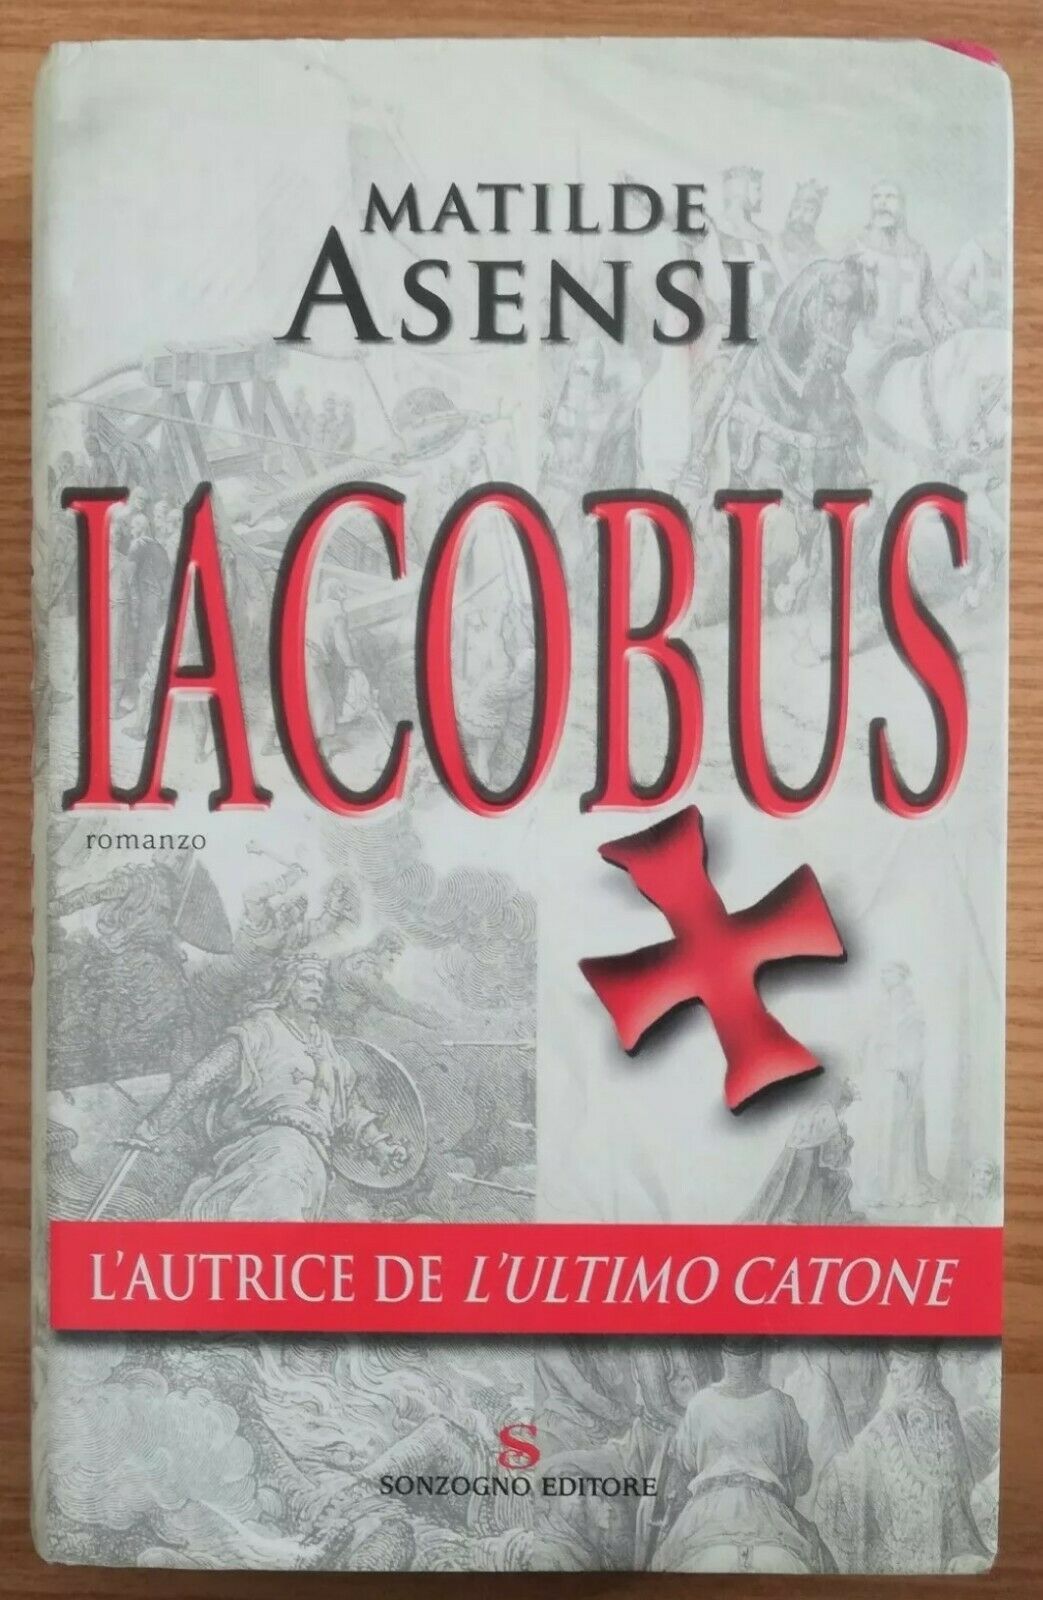 Copertina di Iacobus